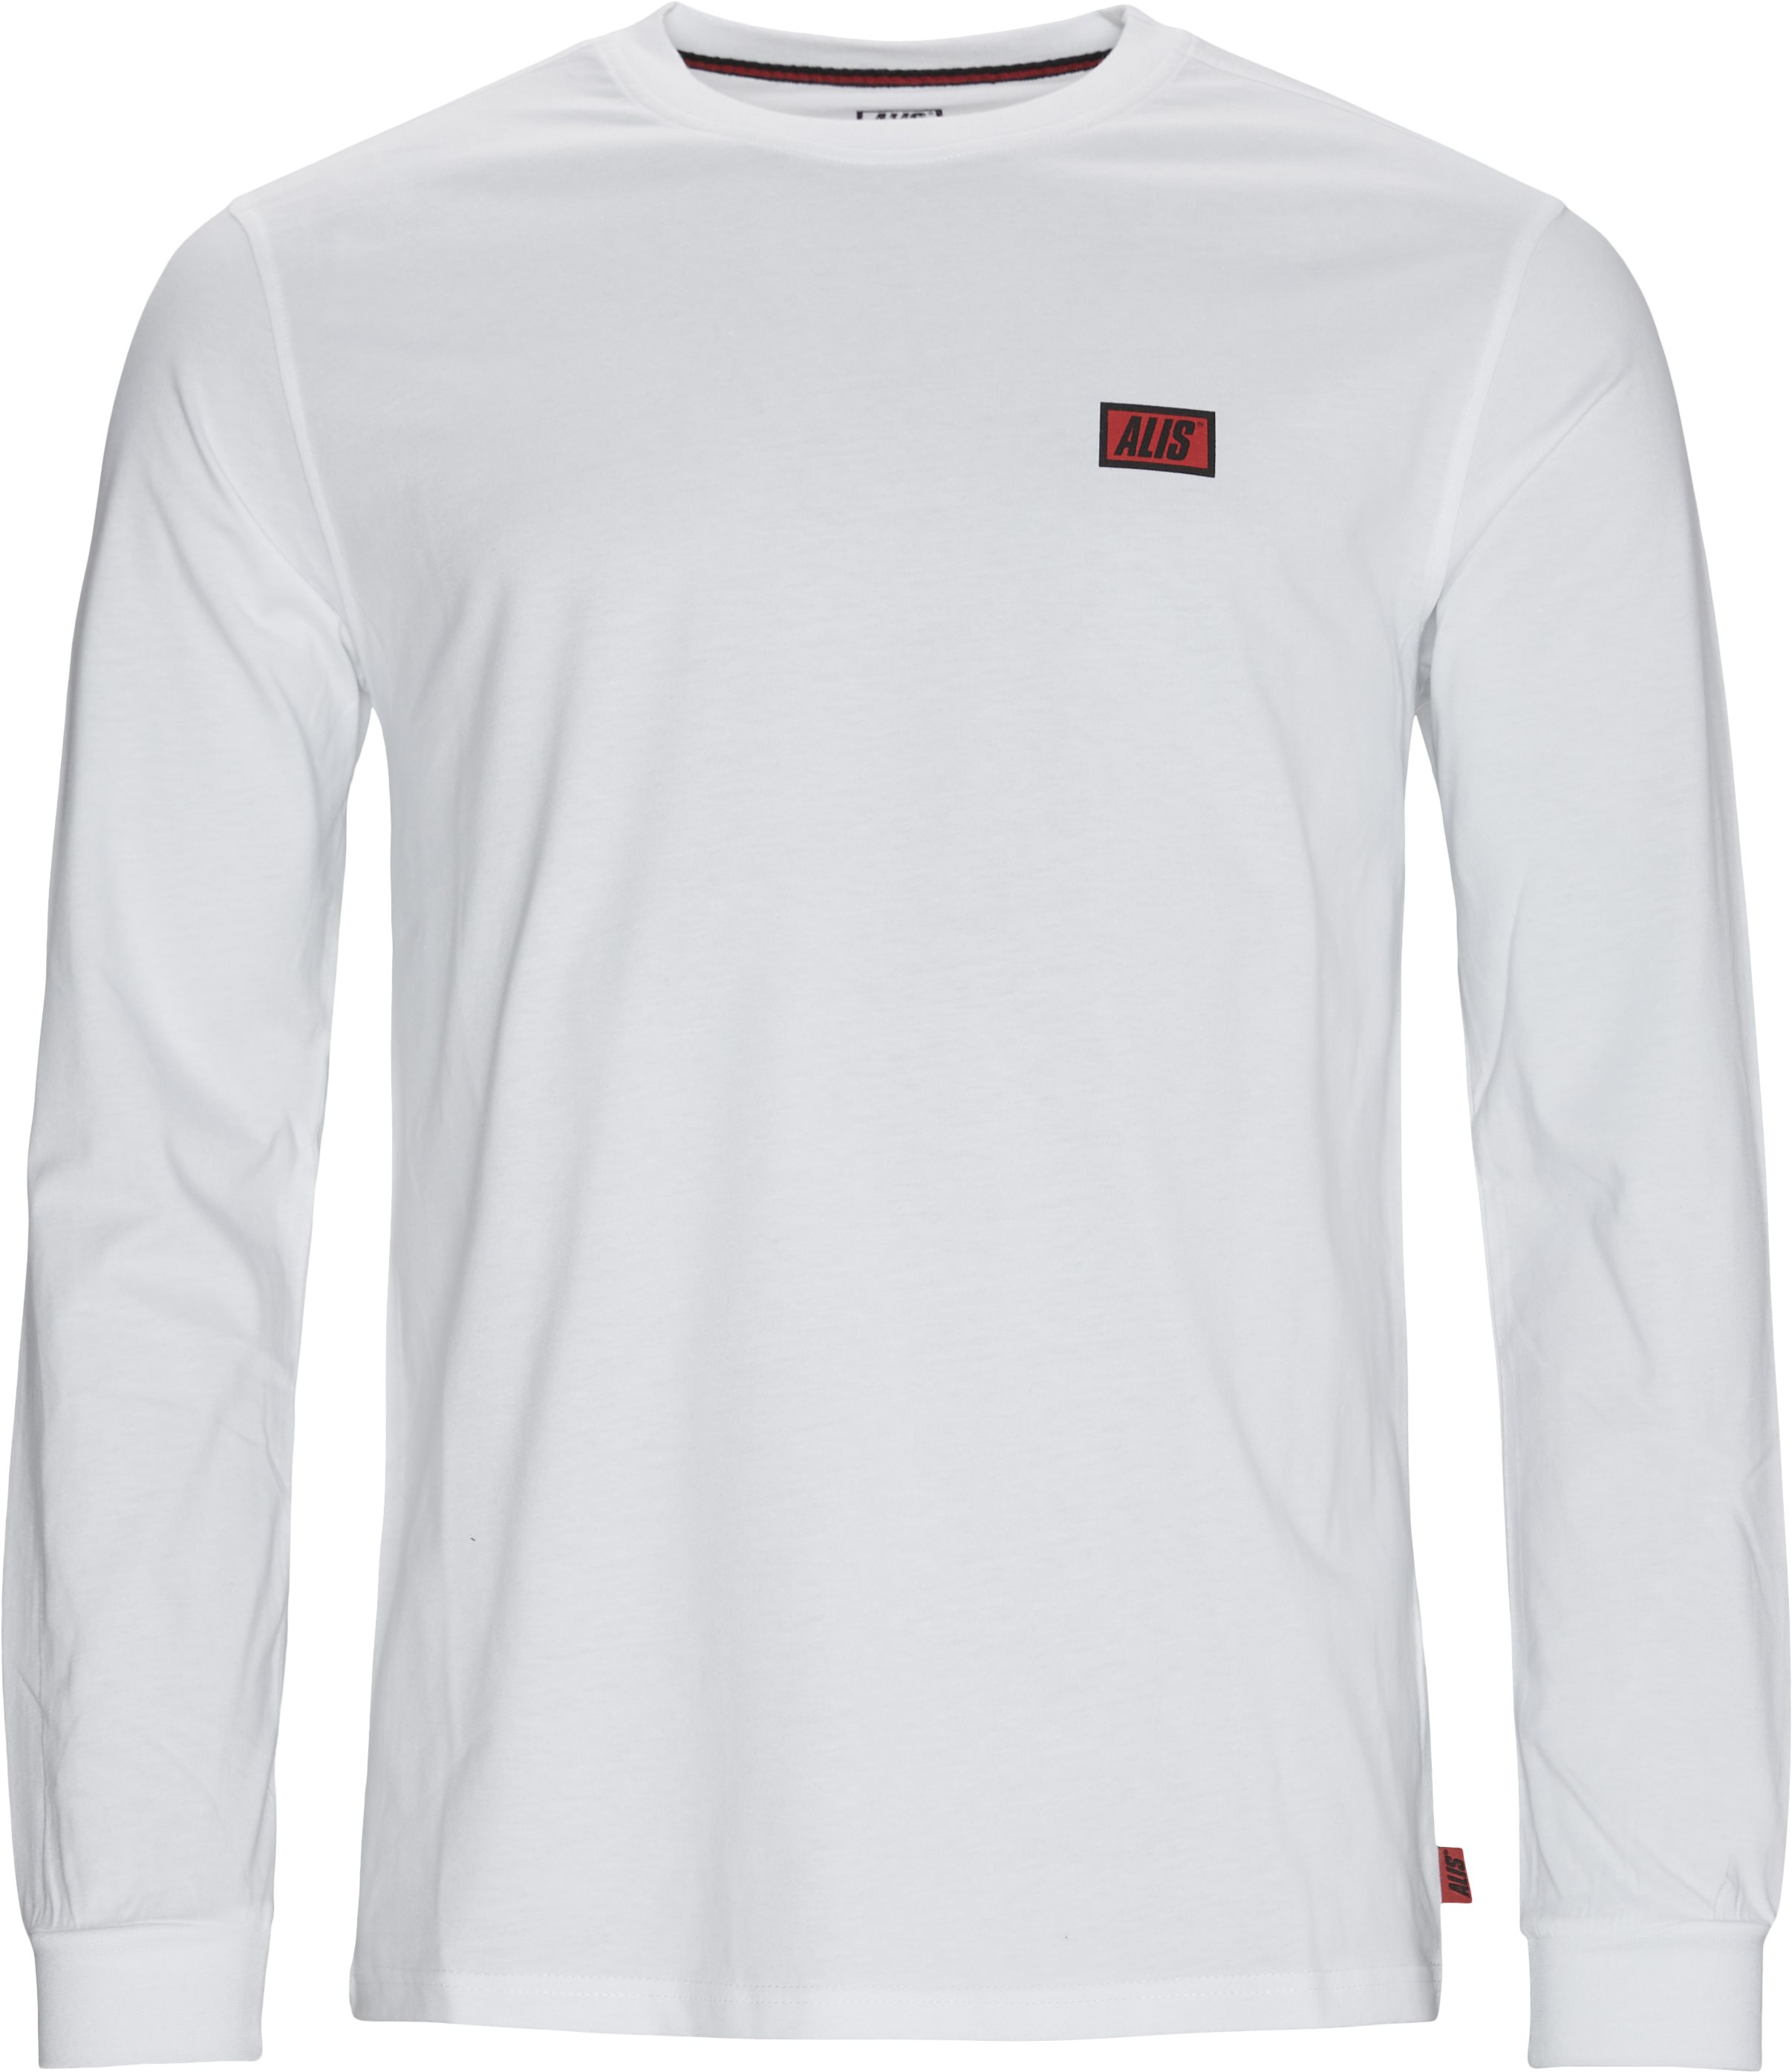 ALIS T-shirts AM3011 White